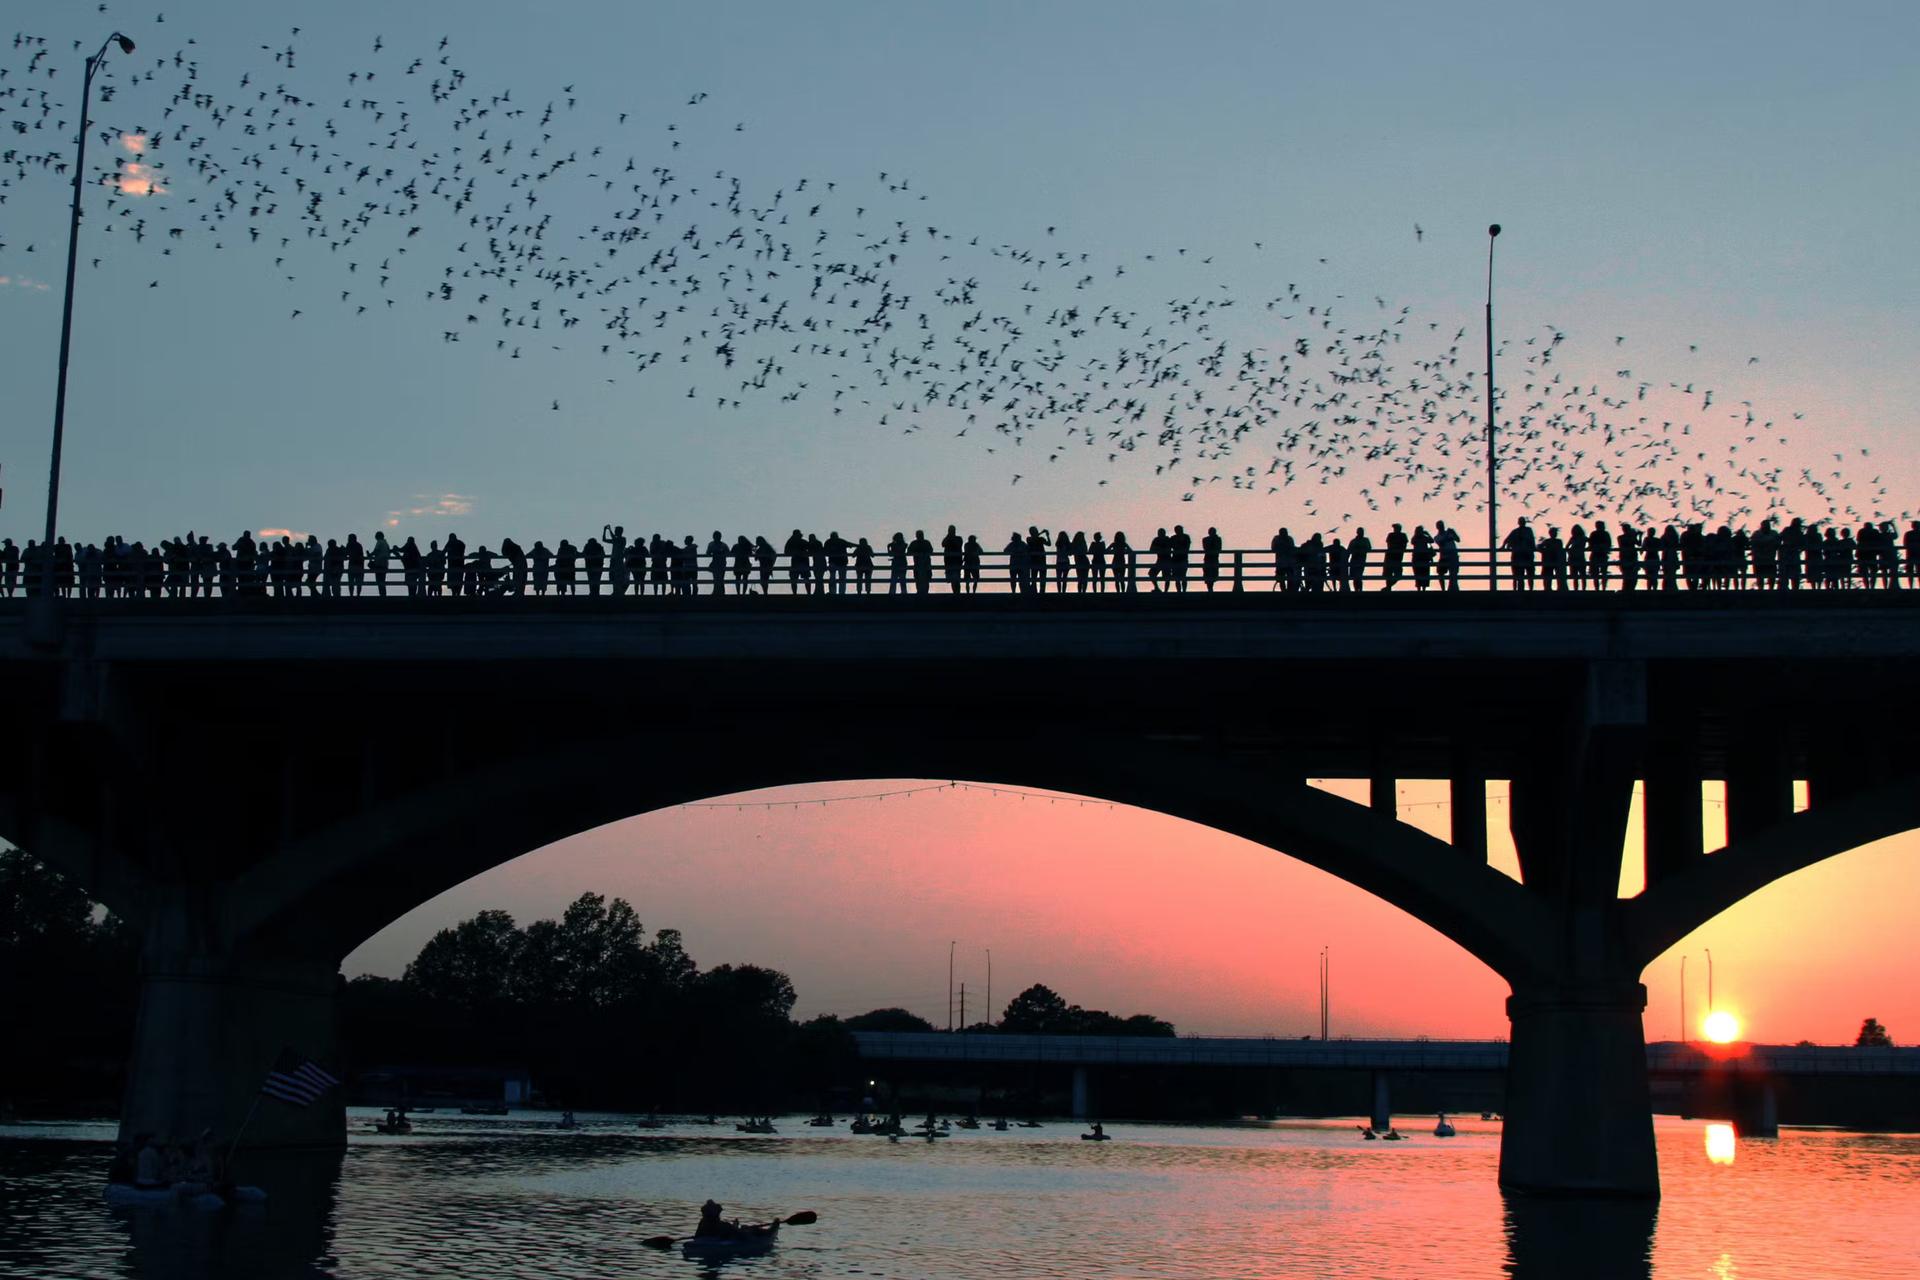 Bats nesting underneath Congress Avenue Bridge take flight at night in Austin during sunset